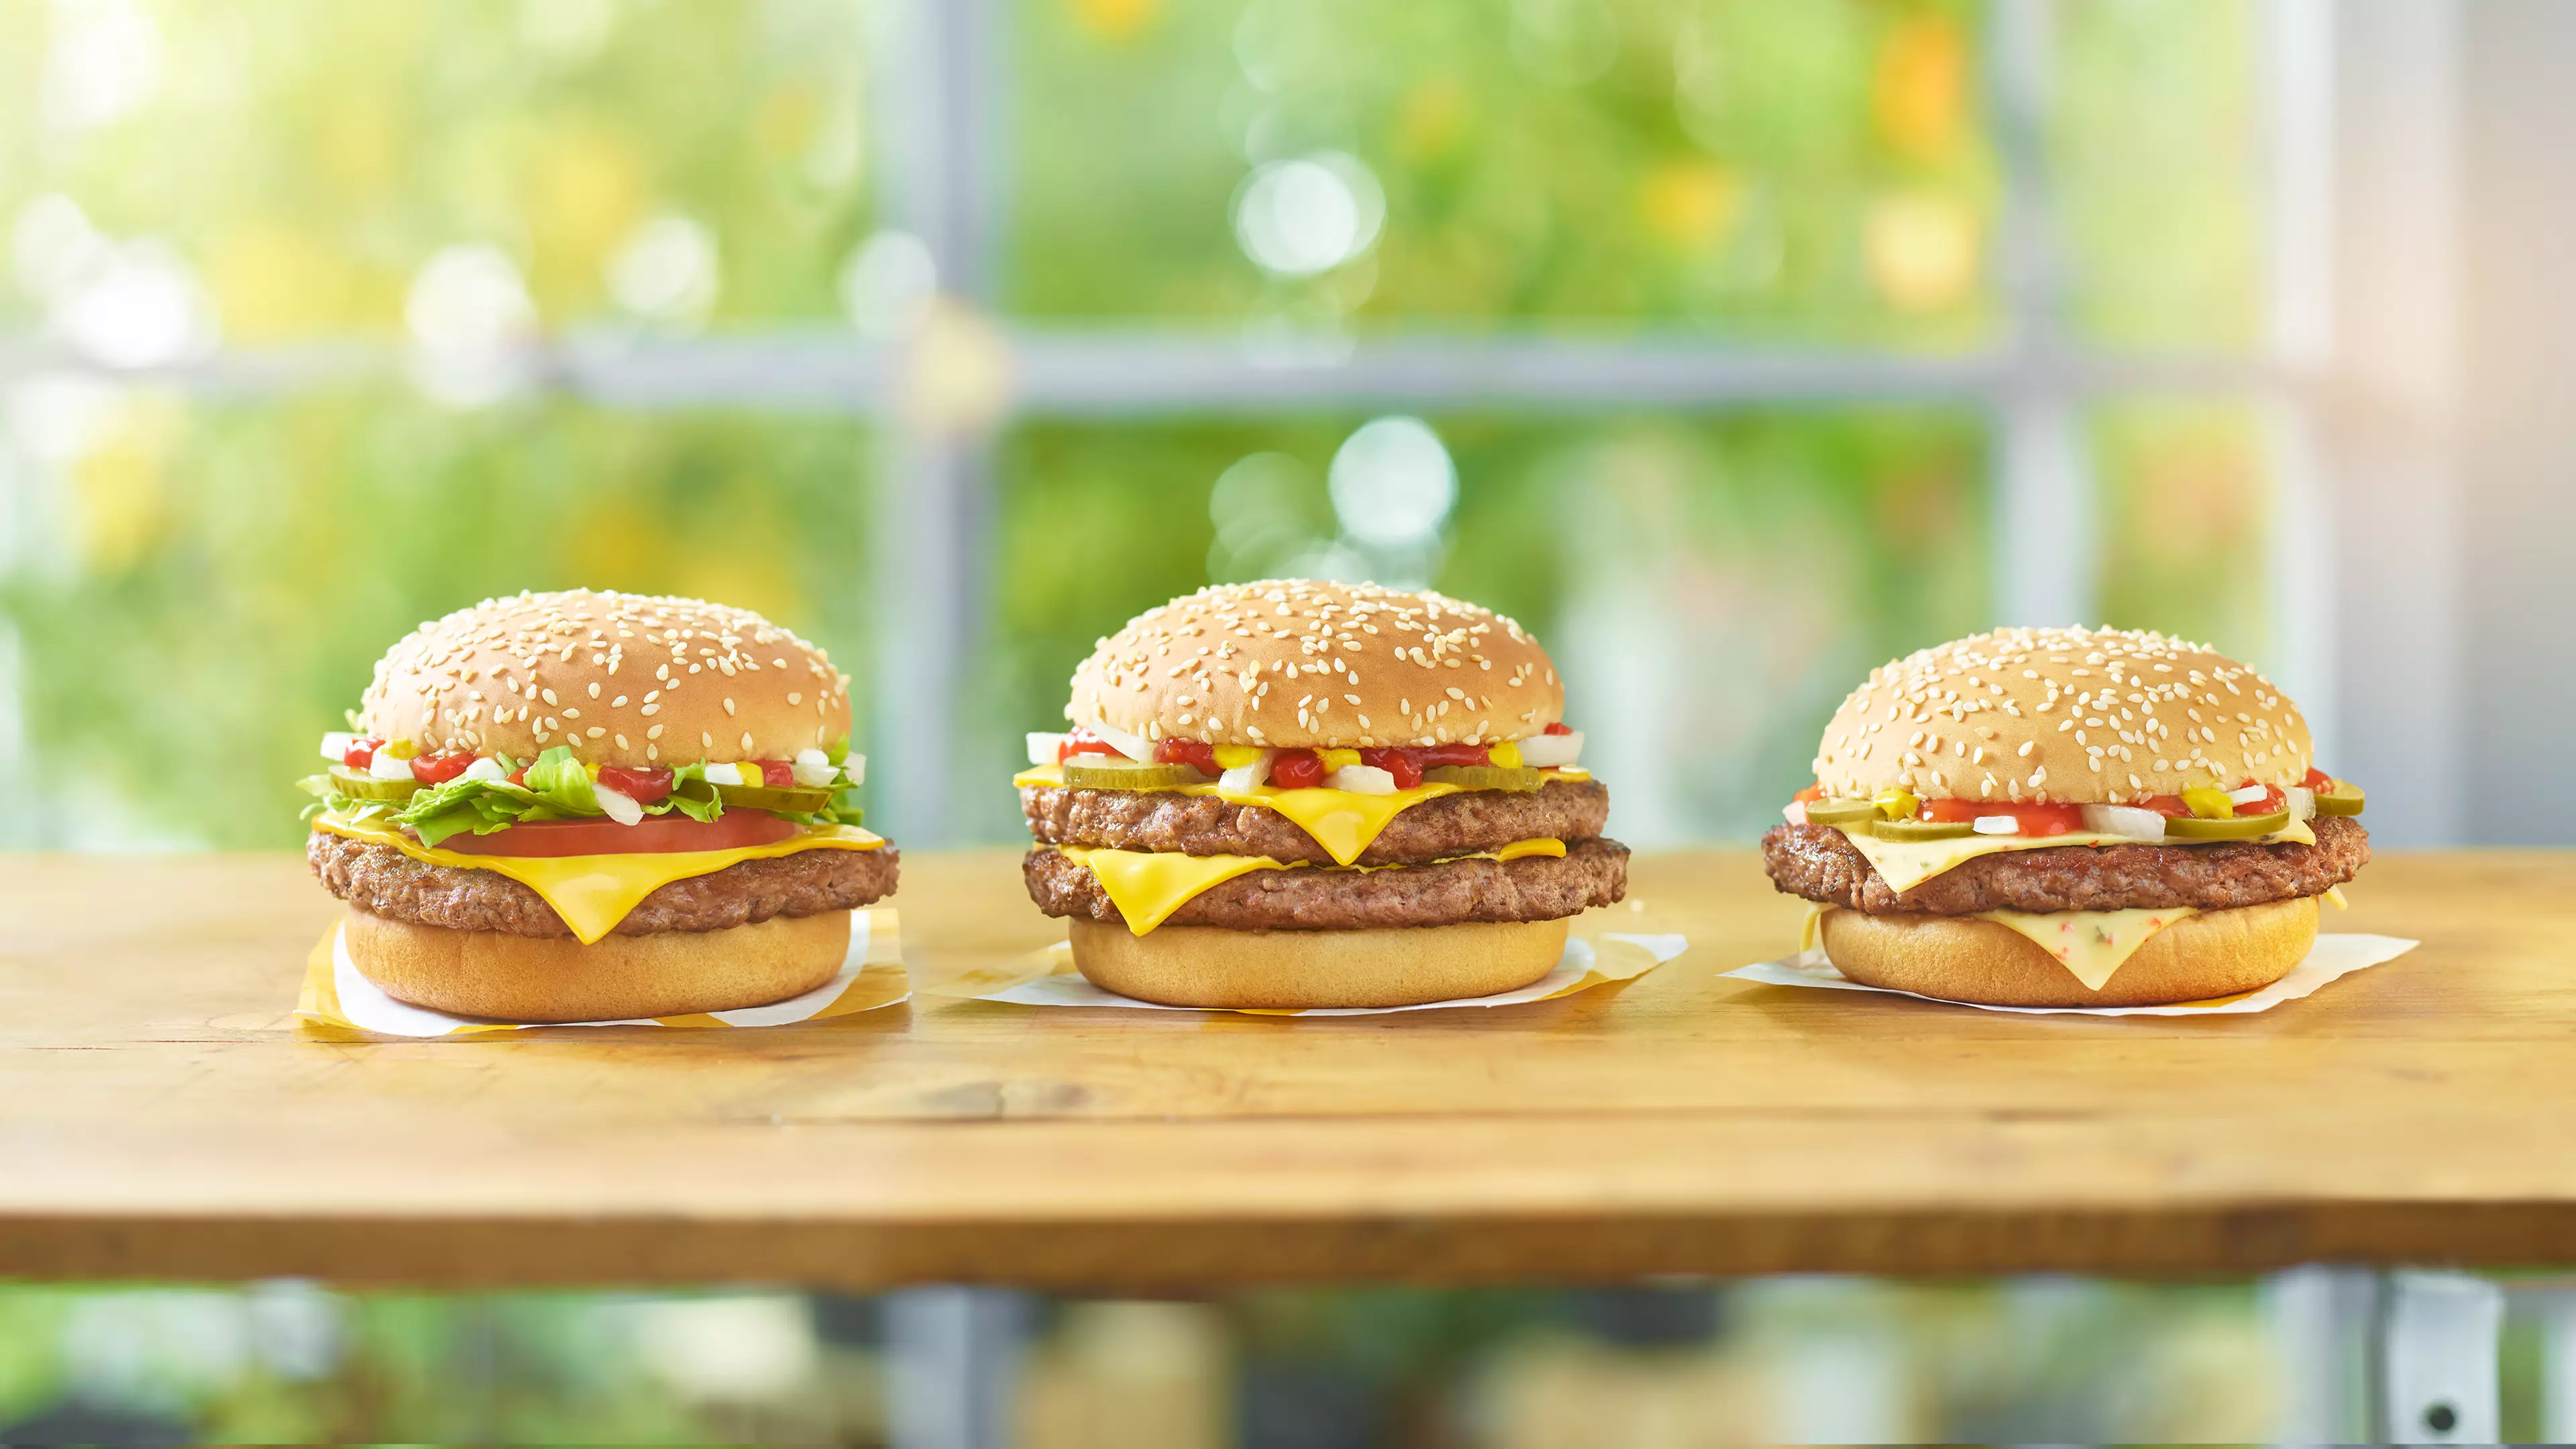 McDonald's Is Adding Five New Items To Its Menu Next Week